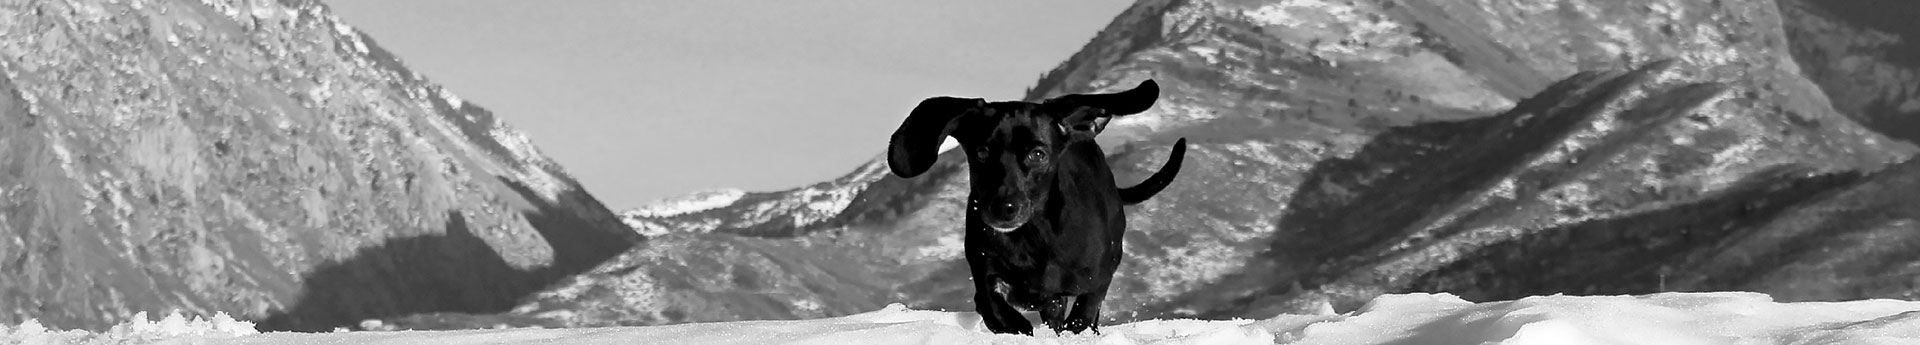 ORIJEN Tundra Dog Food - Dachshund running in the mountains - Rocket from Sandy, Utah